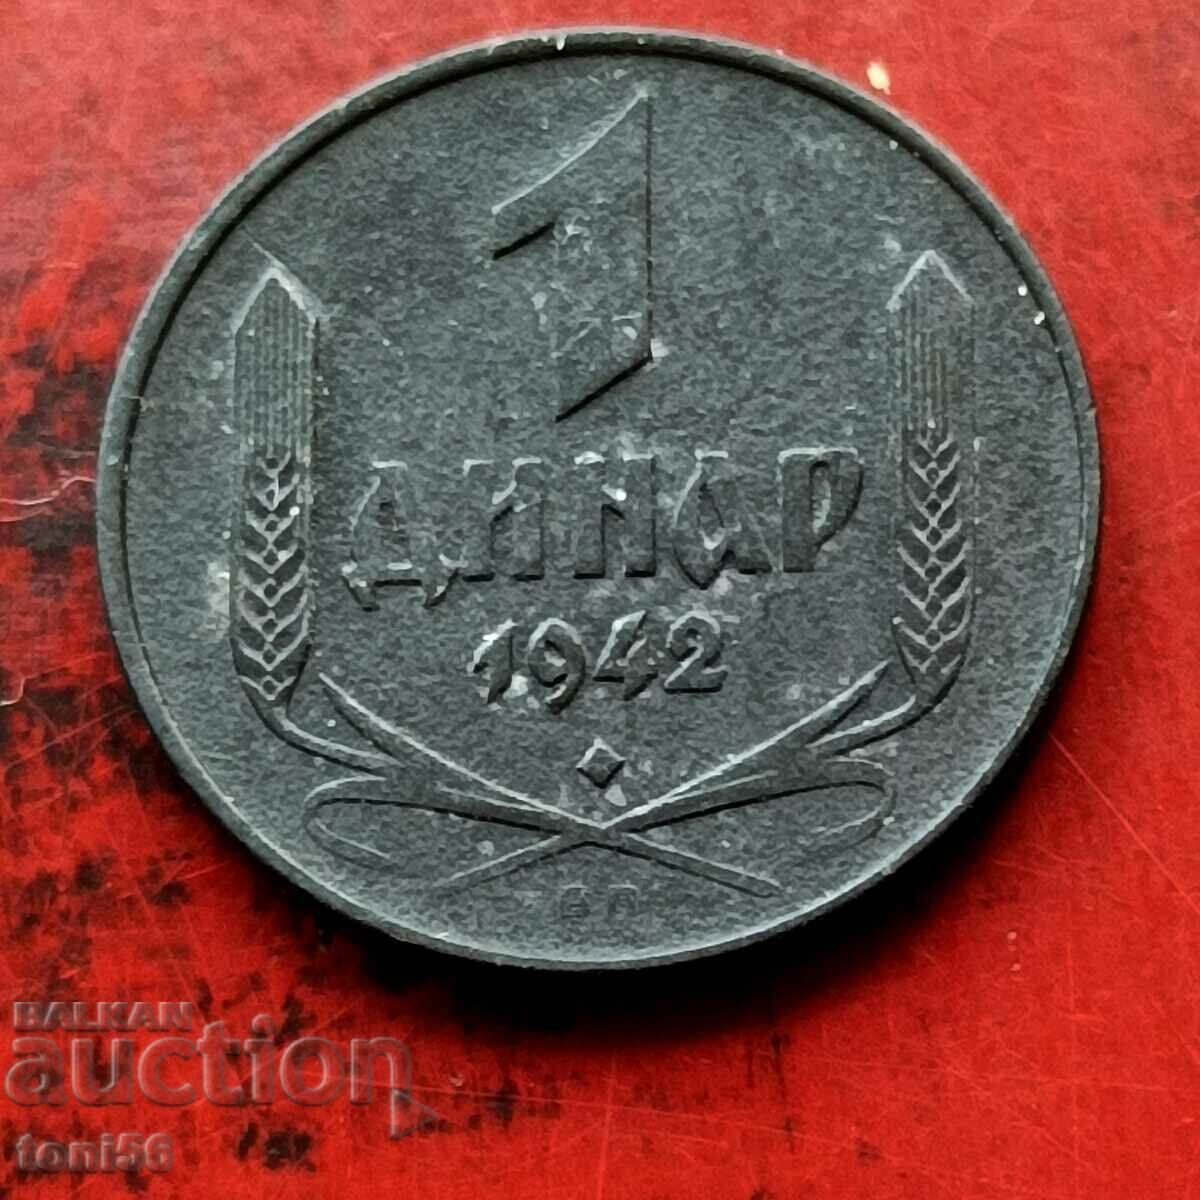 Serbia 1 dinar 1942